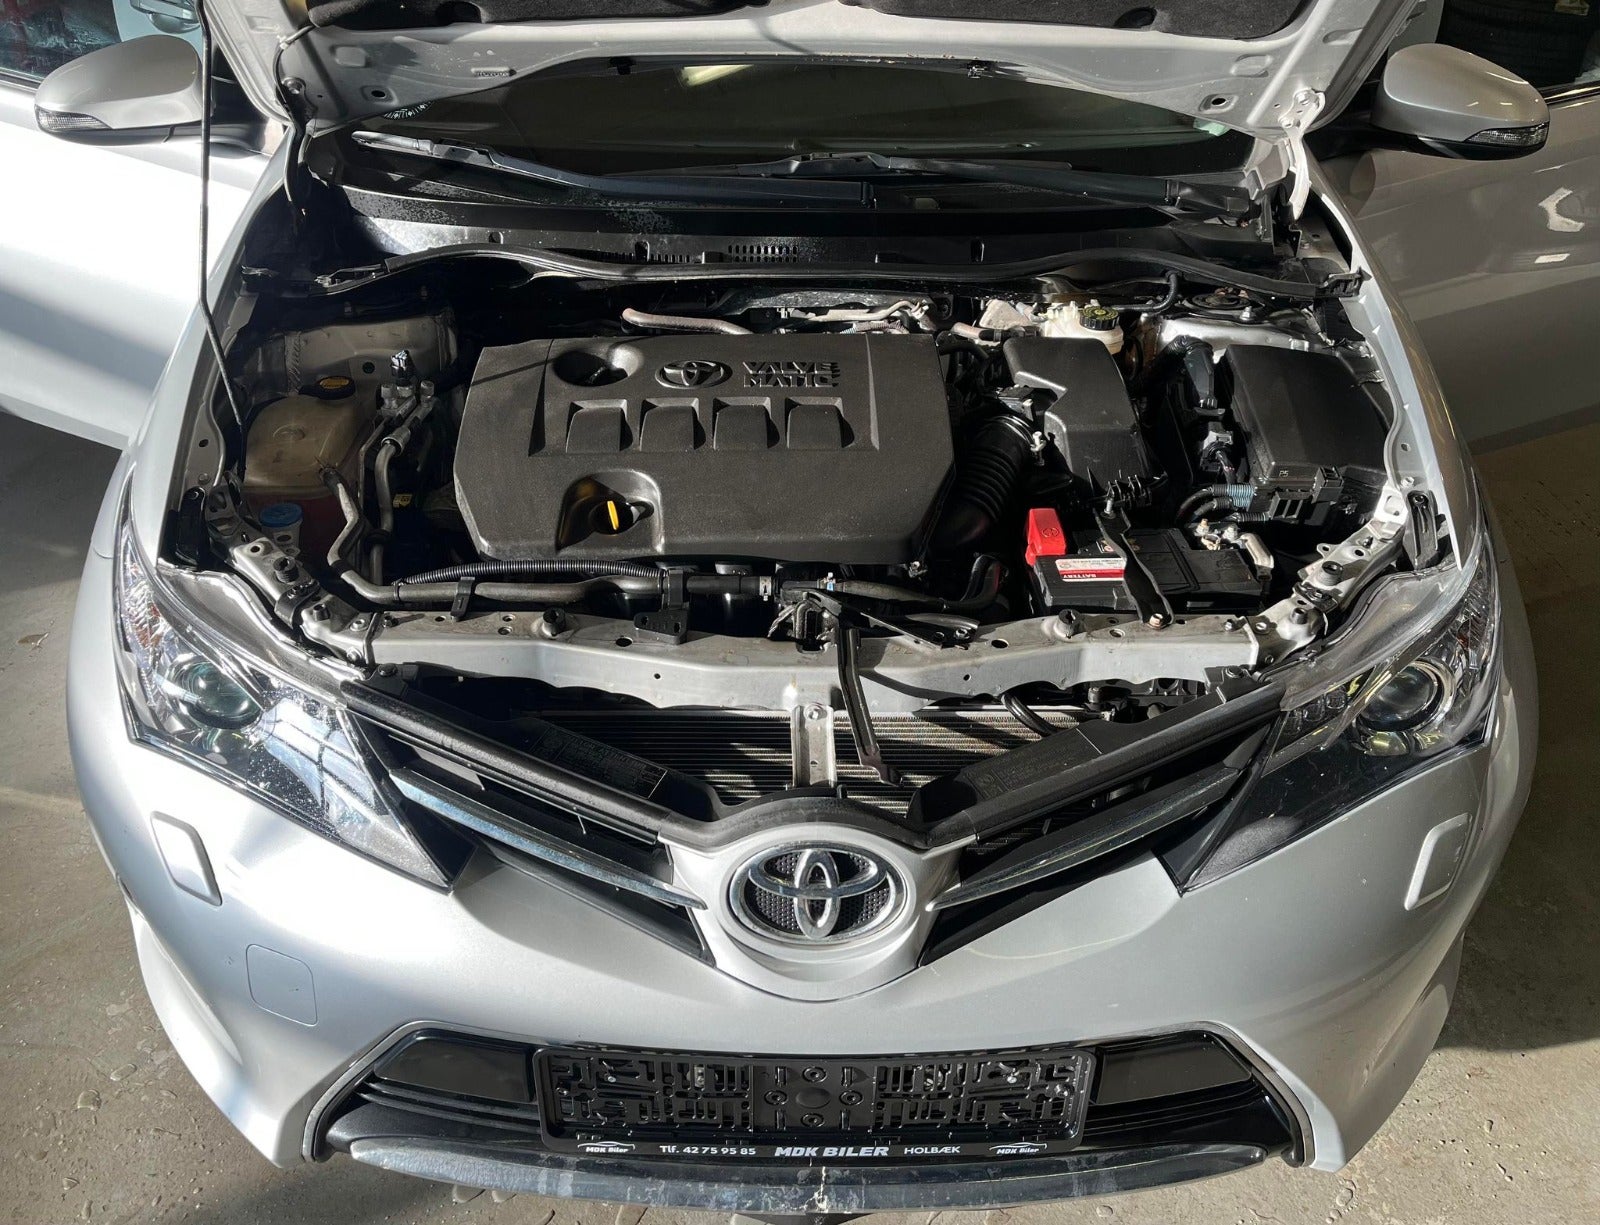 Toyota Auris 1,6 T2 Benzin modelår 2013 km 62000 nysynet ABS